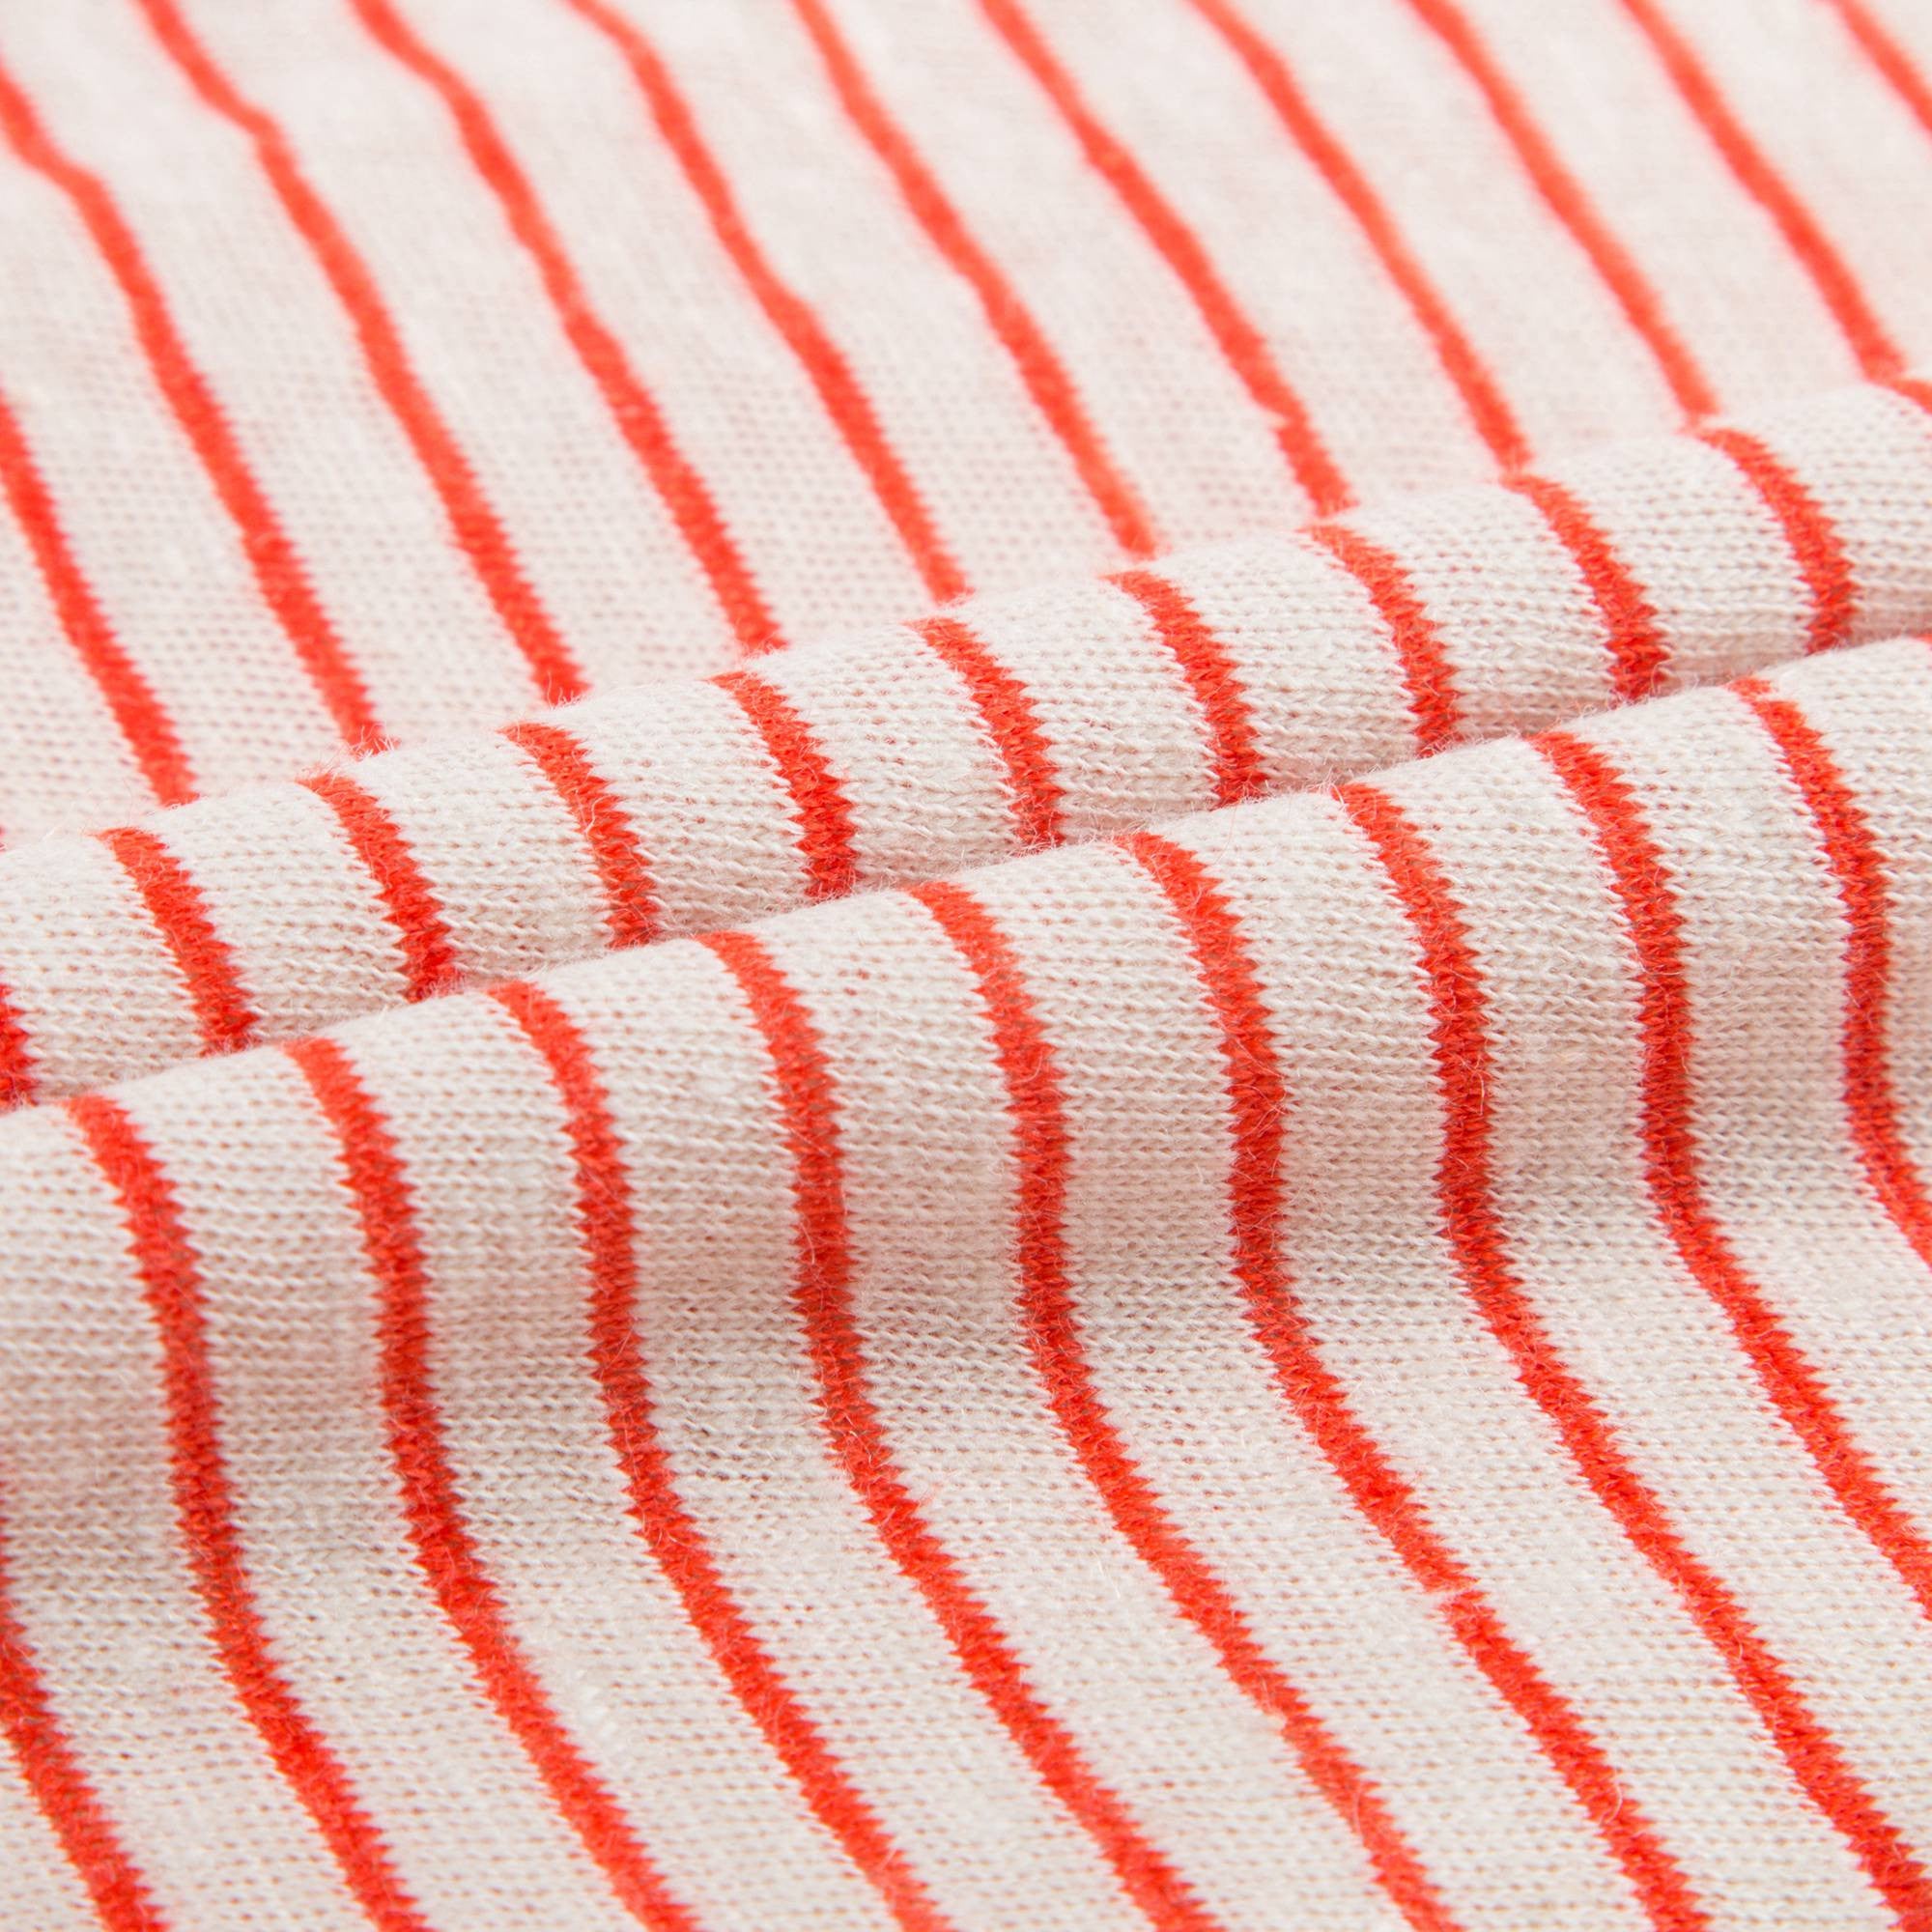 Girls Bright Orange Striped T-shirt